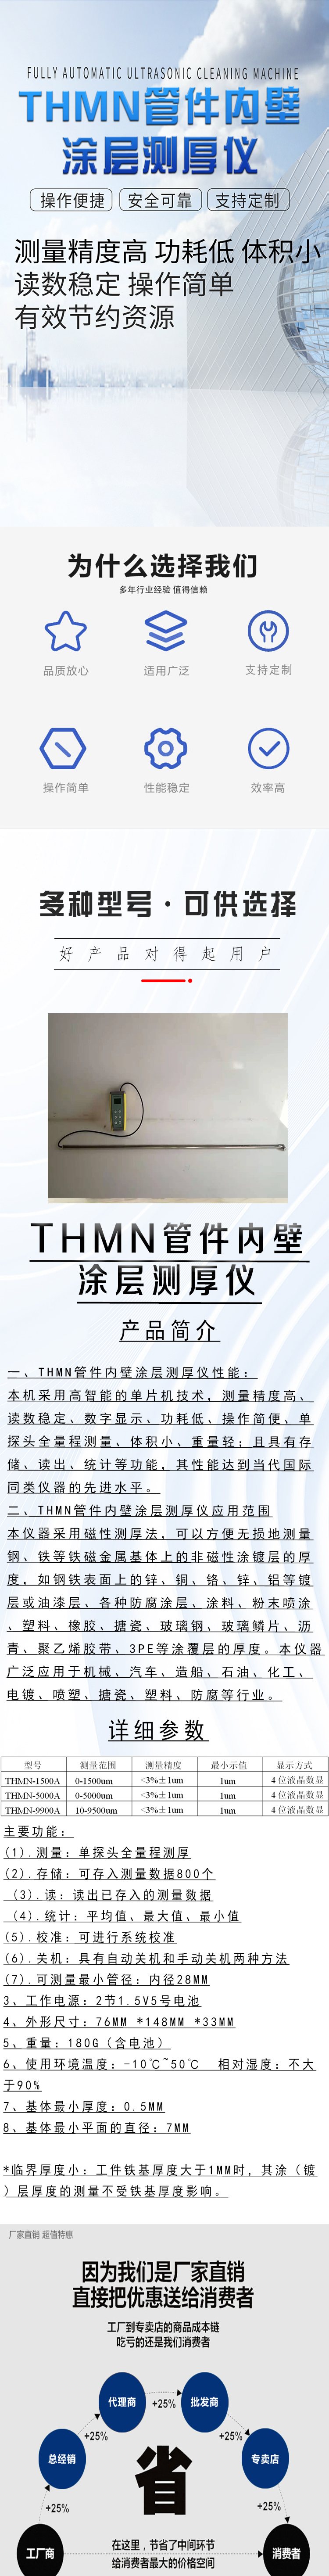 THMN_01